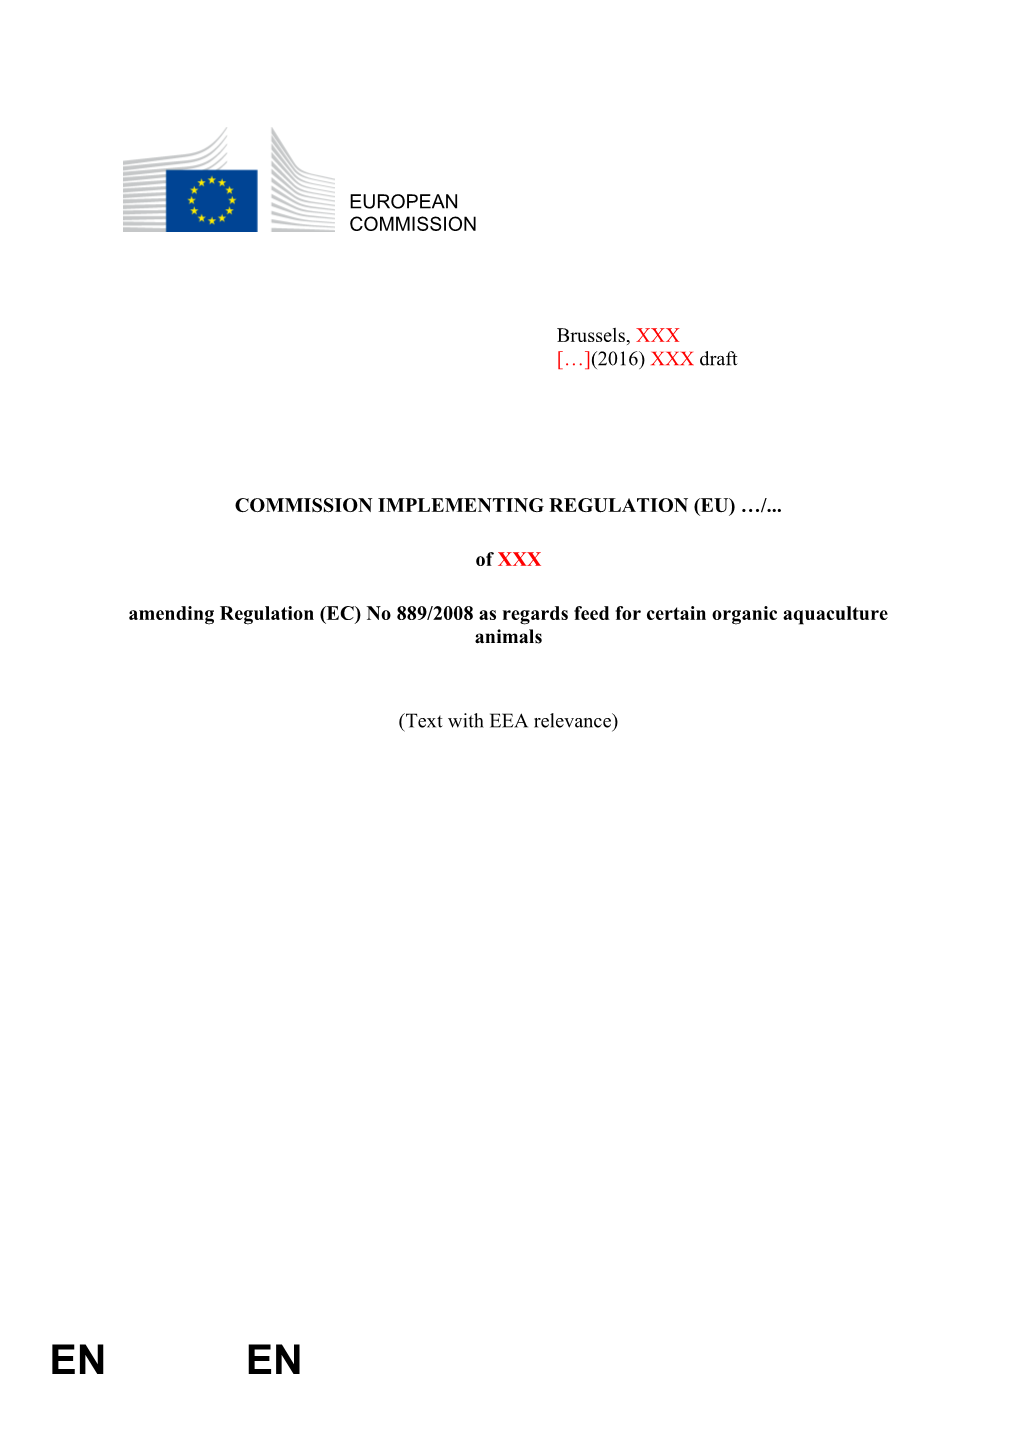 Amending Regulation (EC) No889/2008 As Regards Feed for Certain Organic Aquaculture Animals